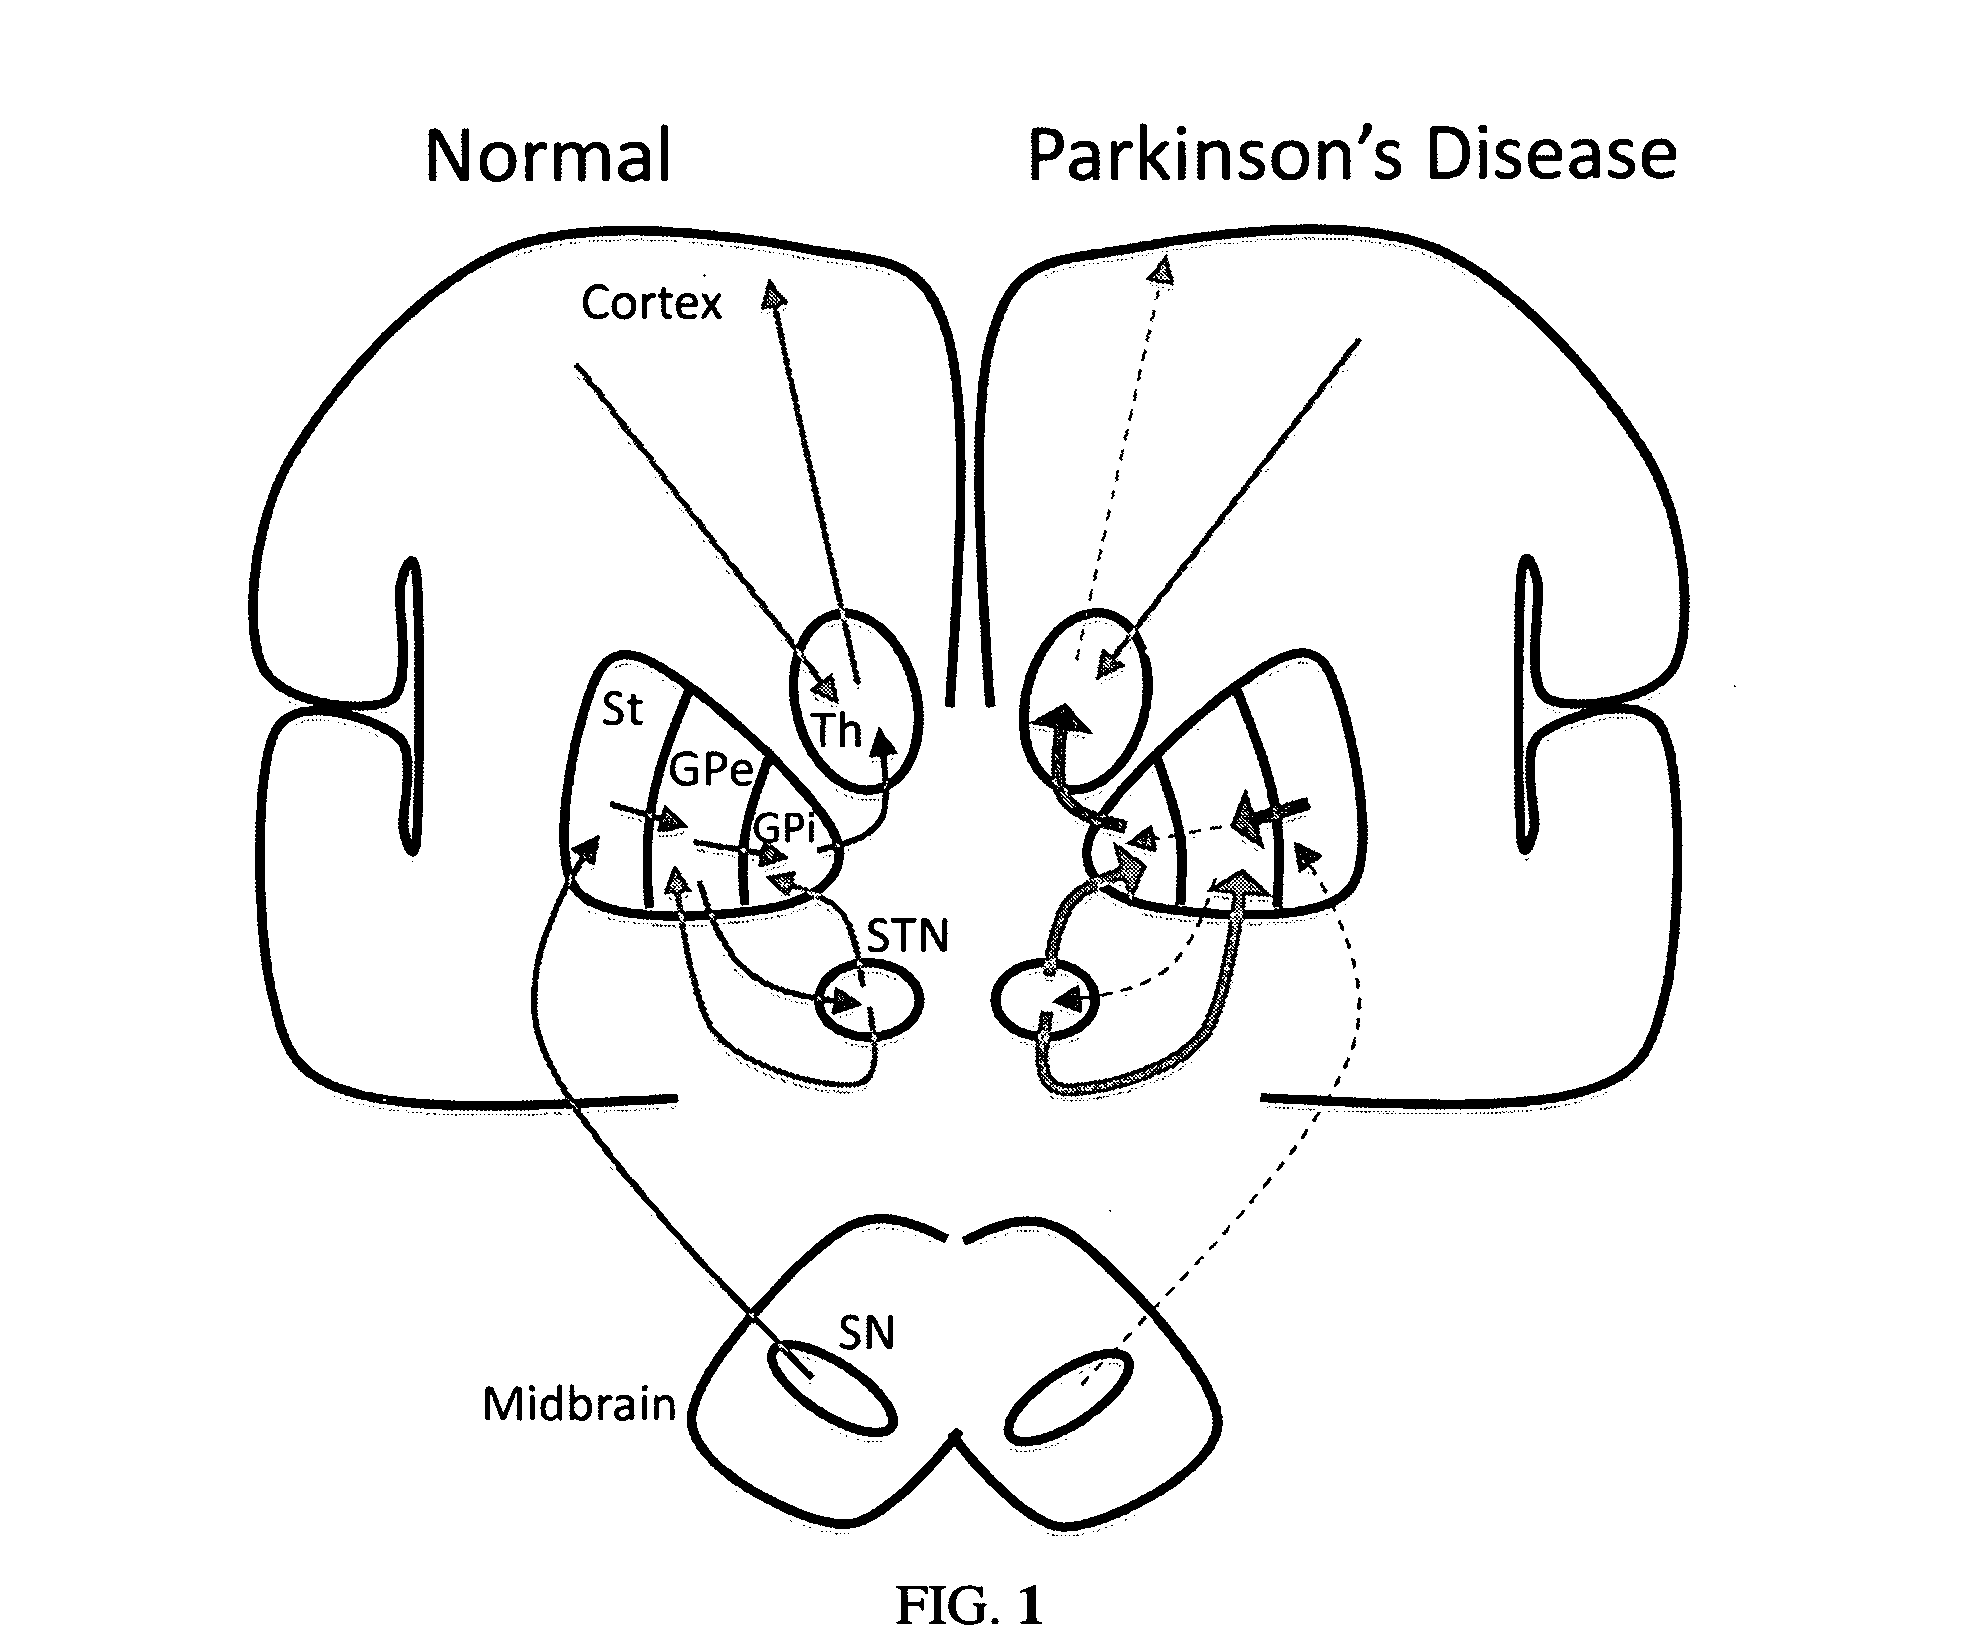 Model Based Control of Parkinson's Disease